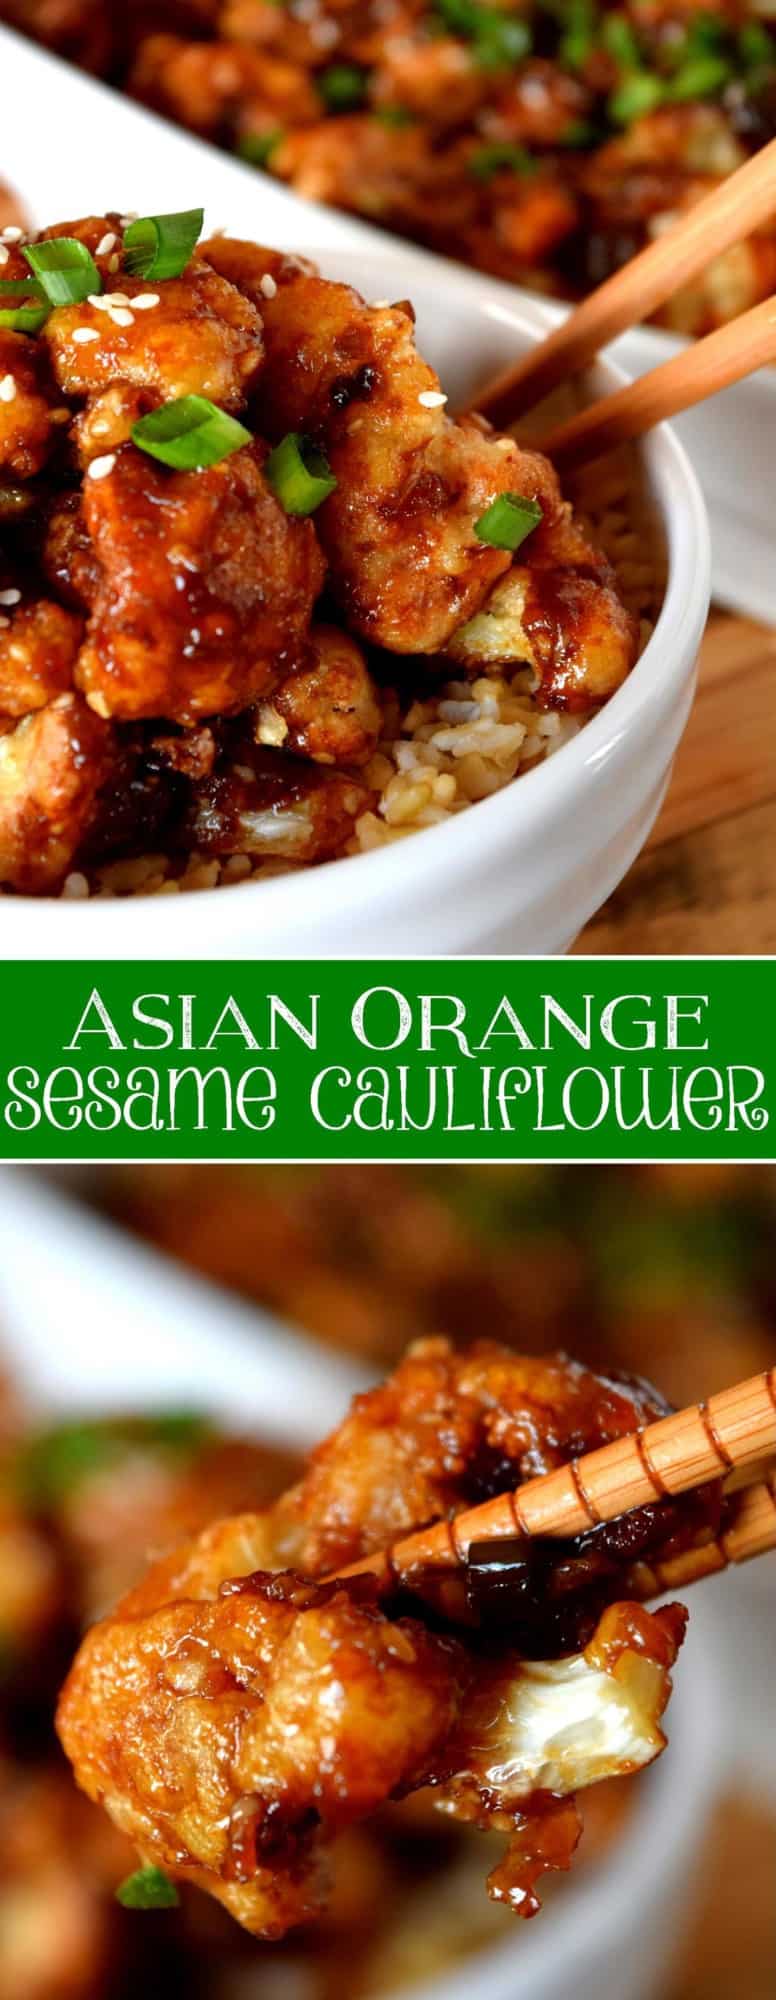 Asian Orange Sesame Cauliflower